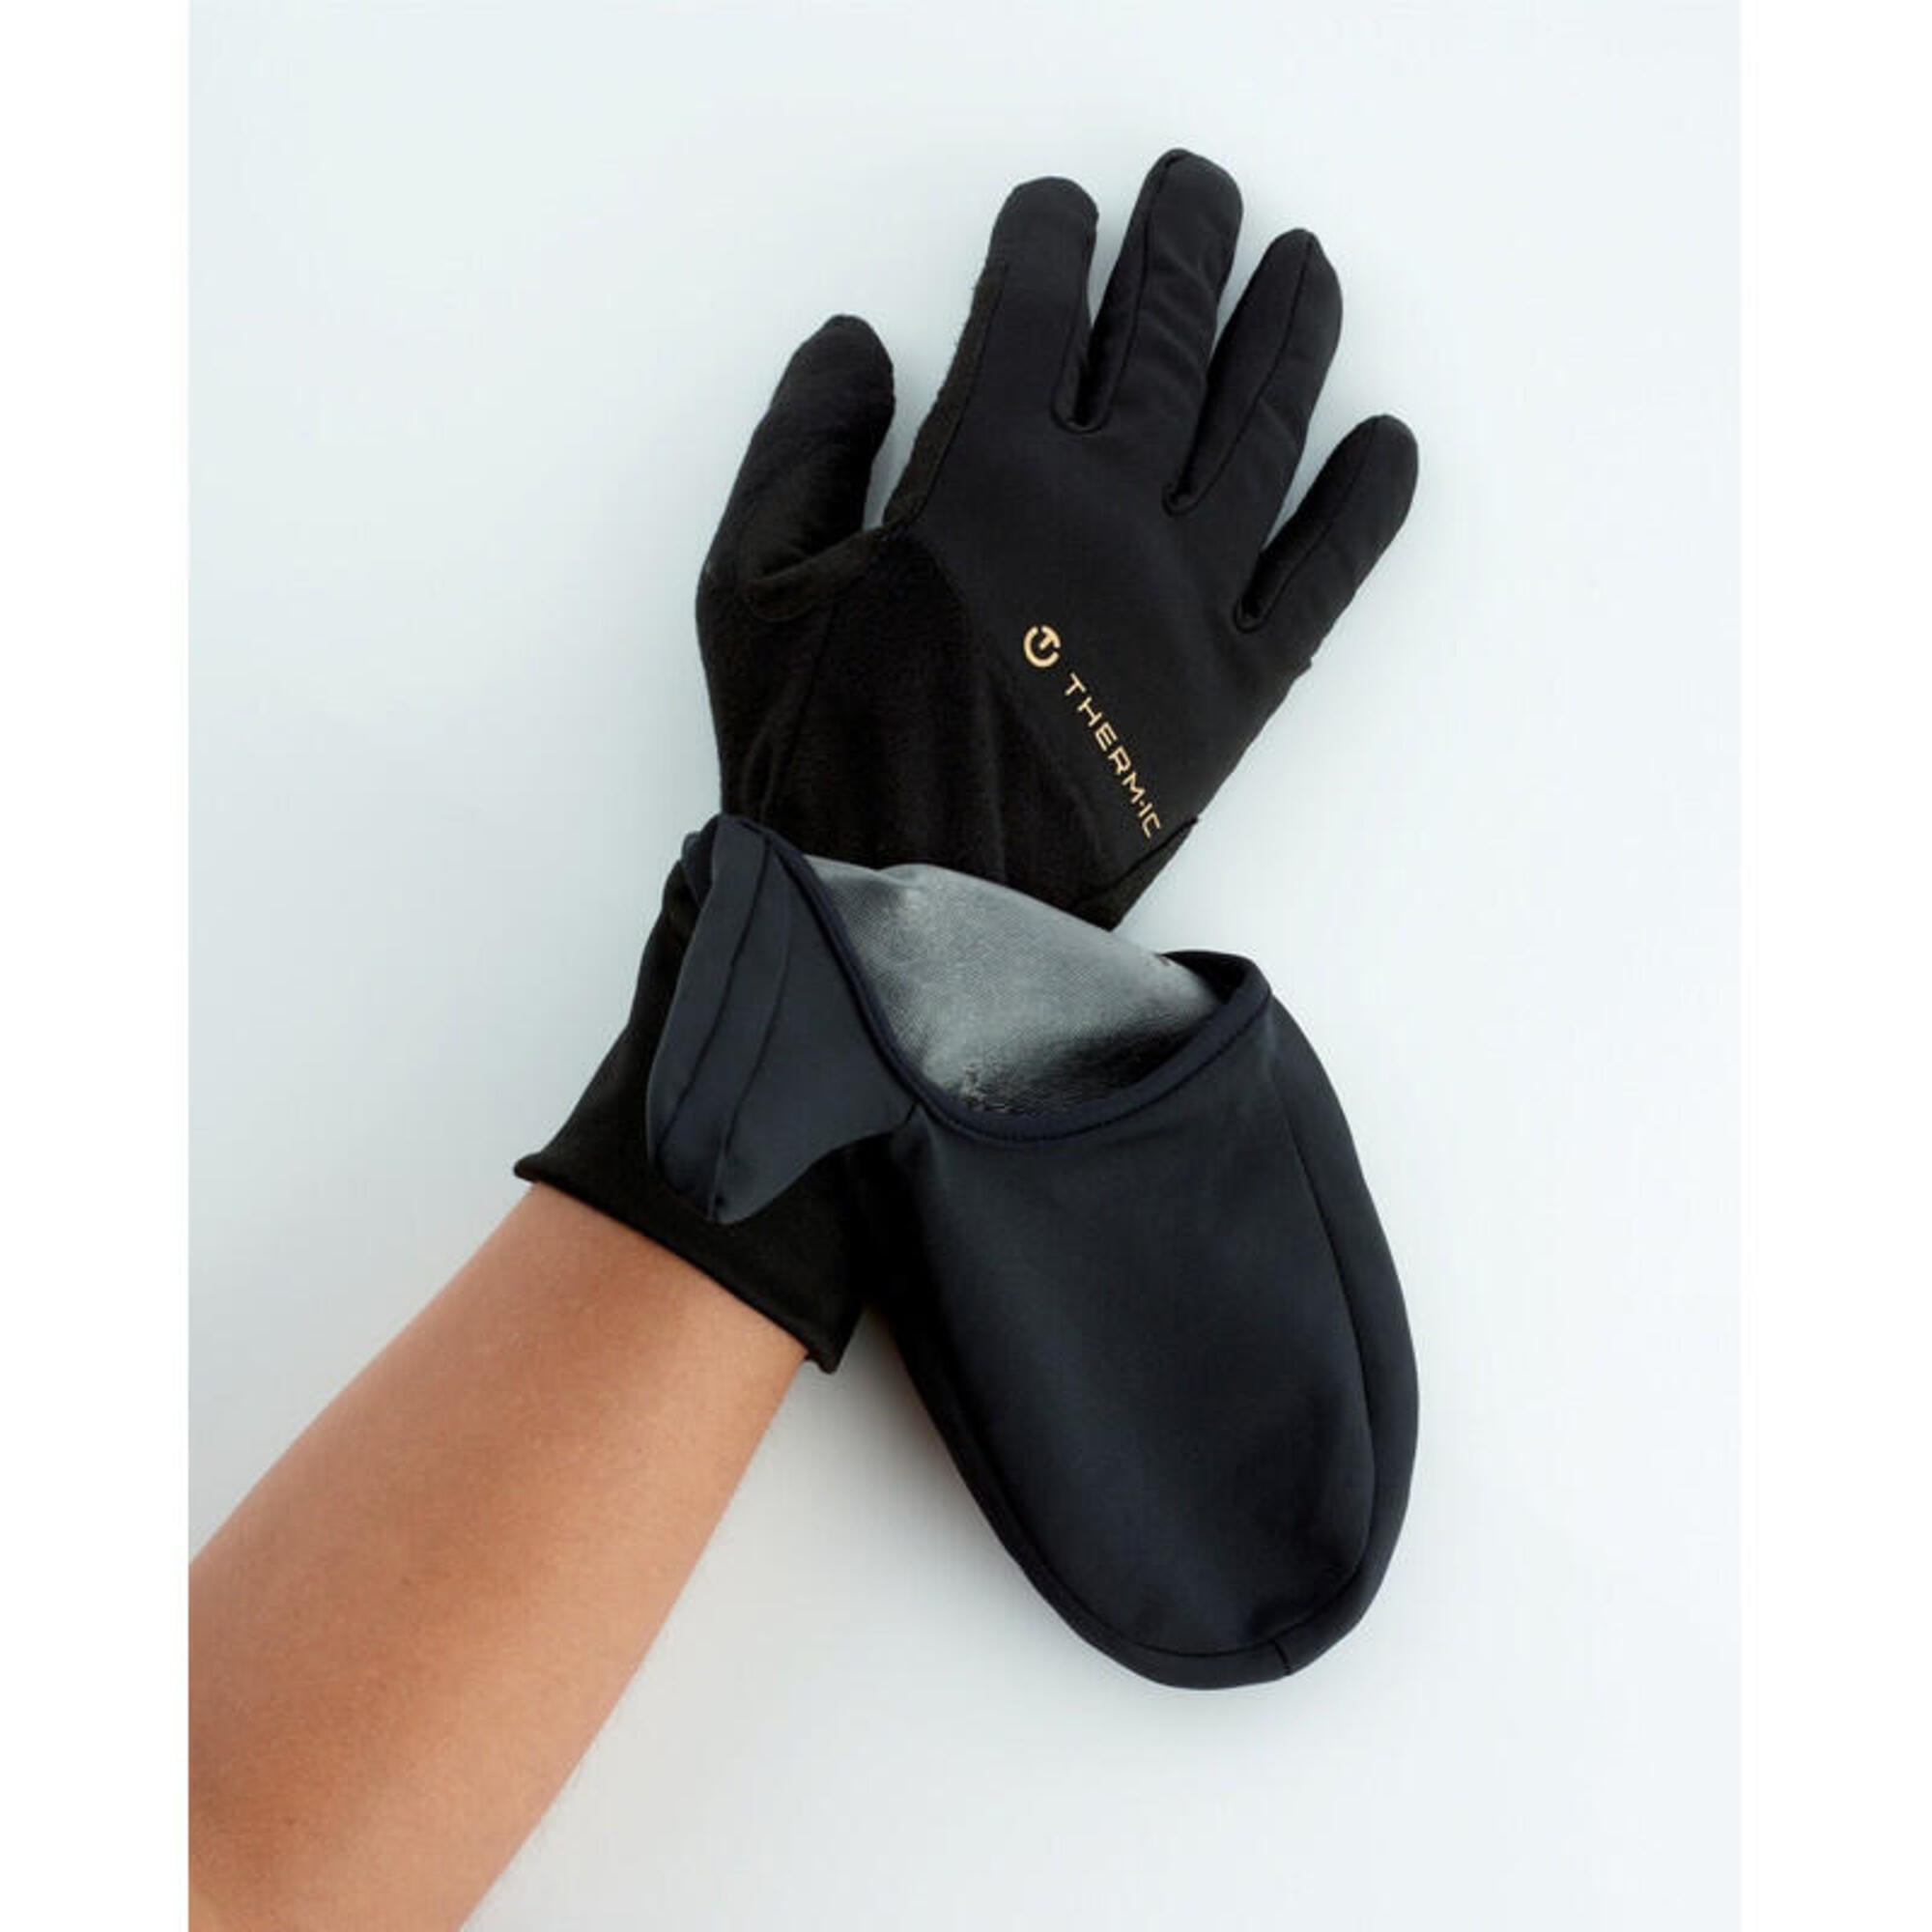 Guanti leggeri e ibridi, trasformabili in muffole - Versatile Light Gloves